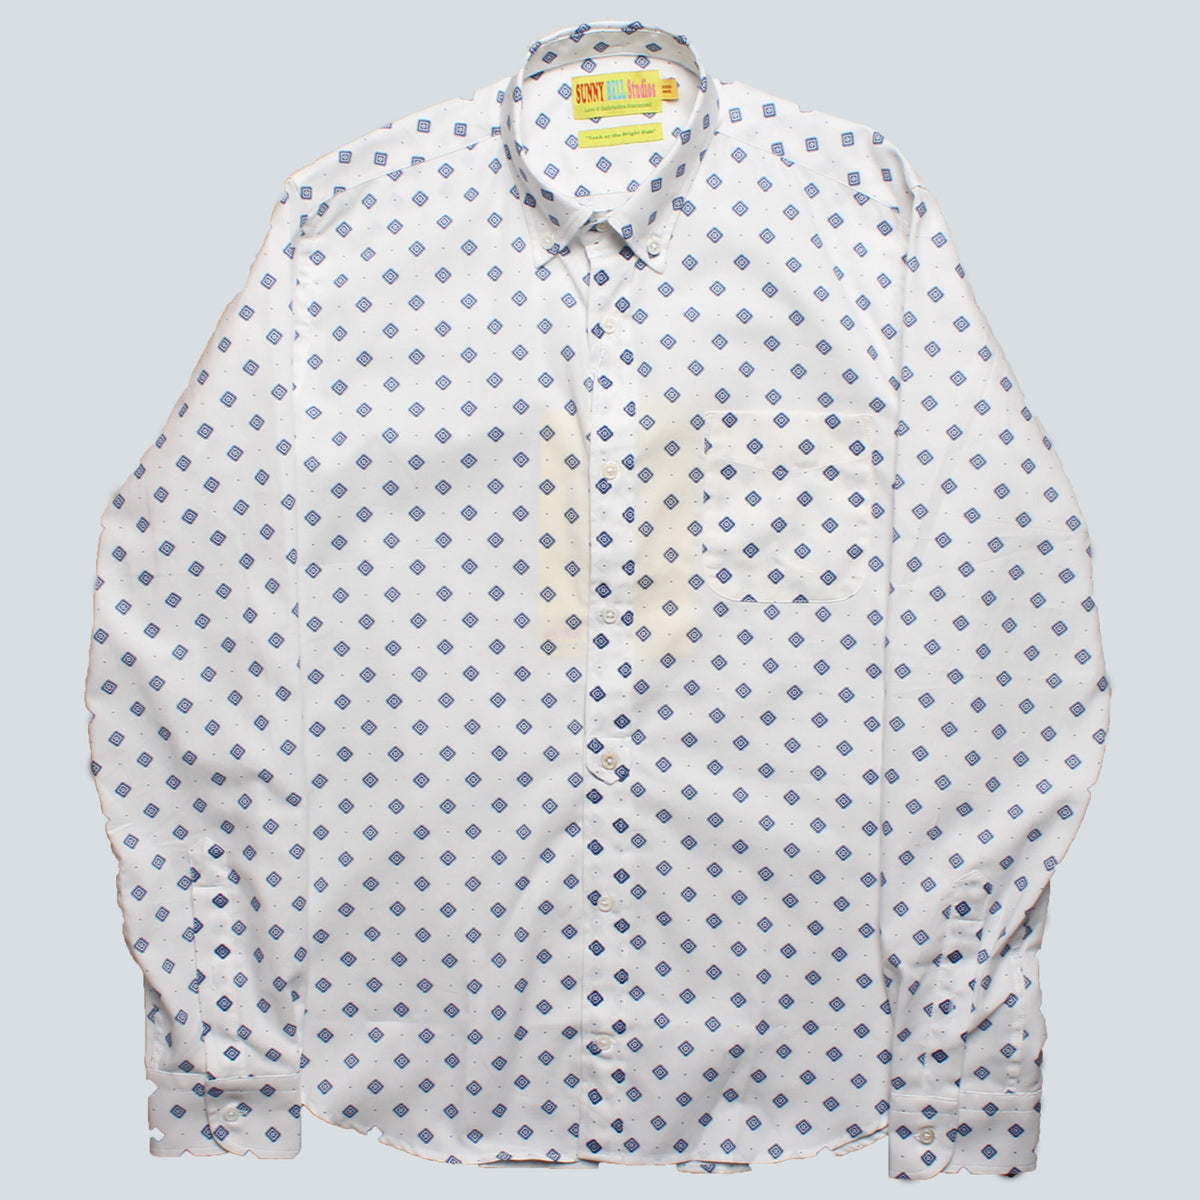 Sunny Bell Studios - Oxford Shirt - White Diamond Print